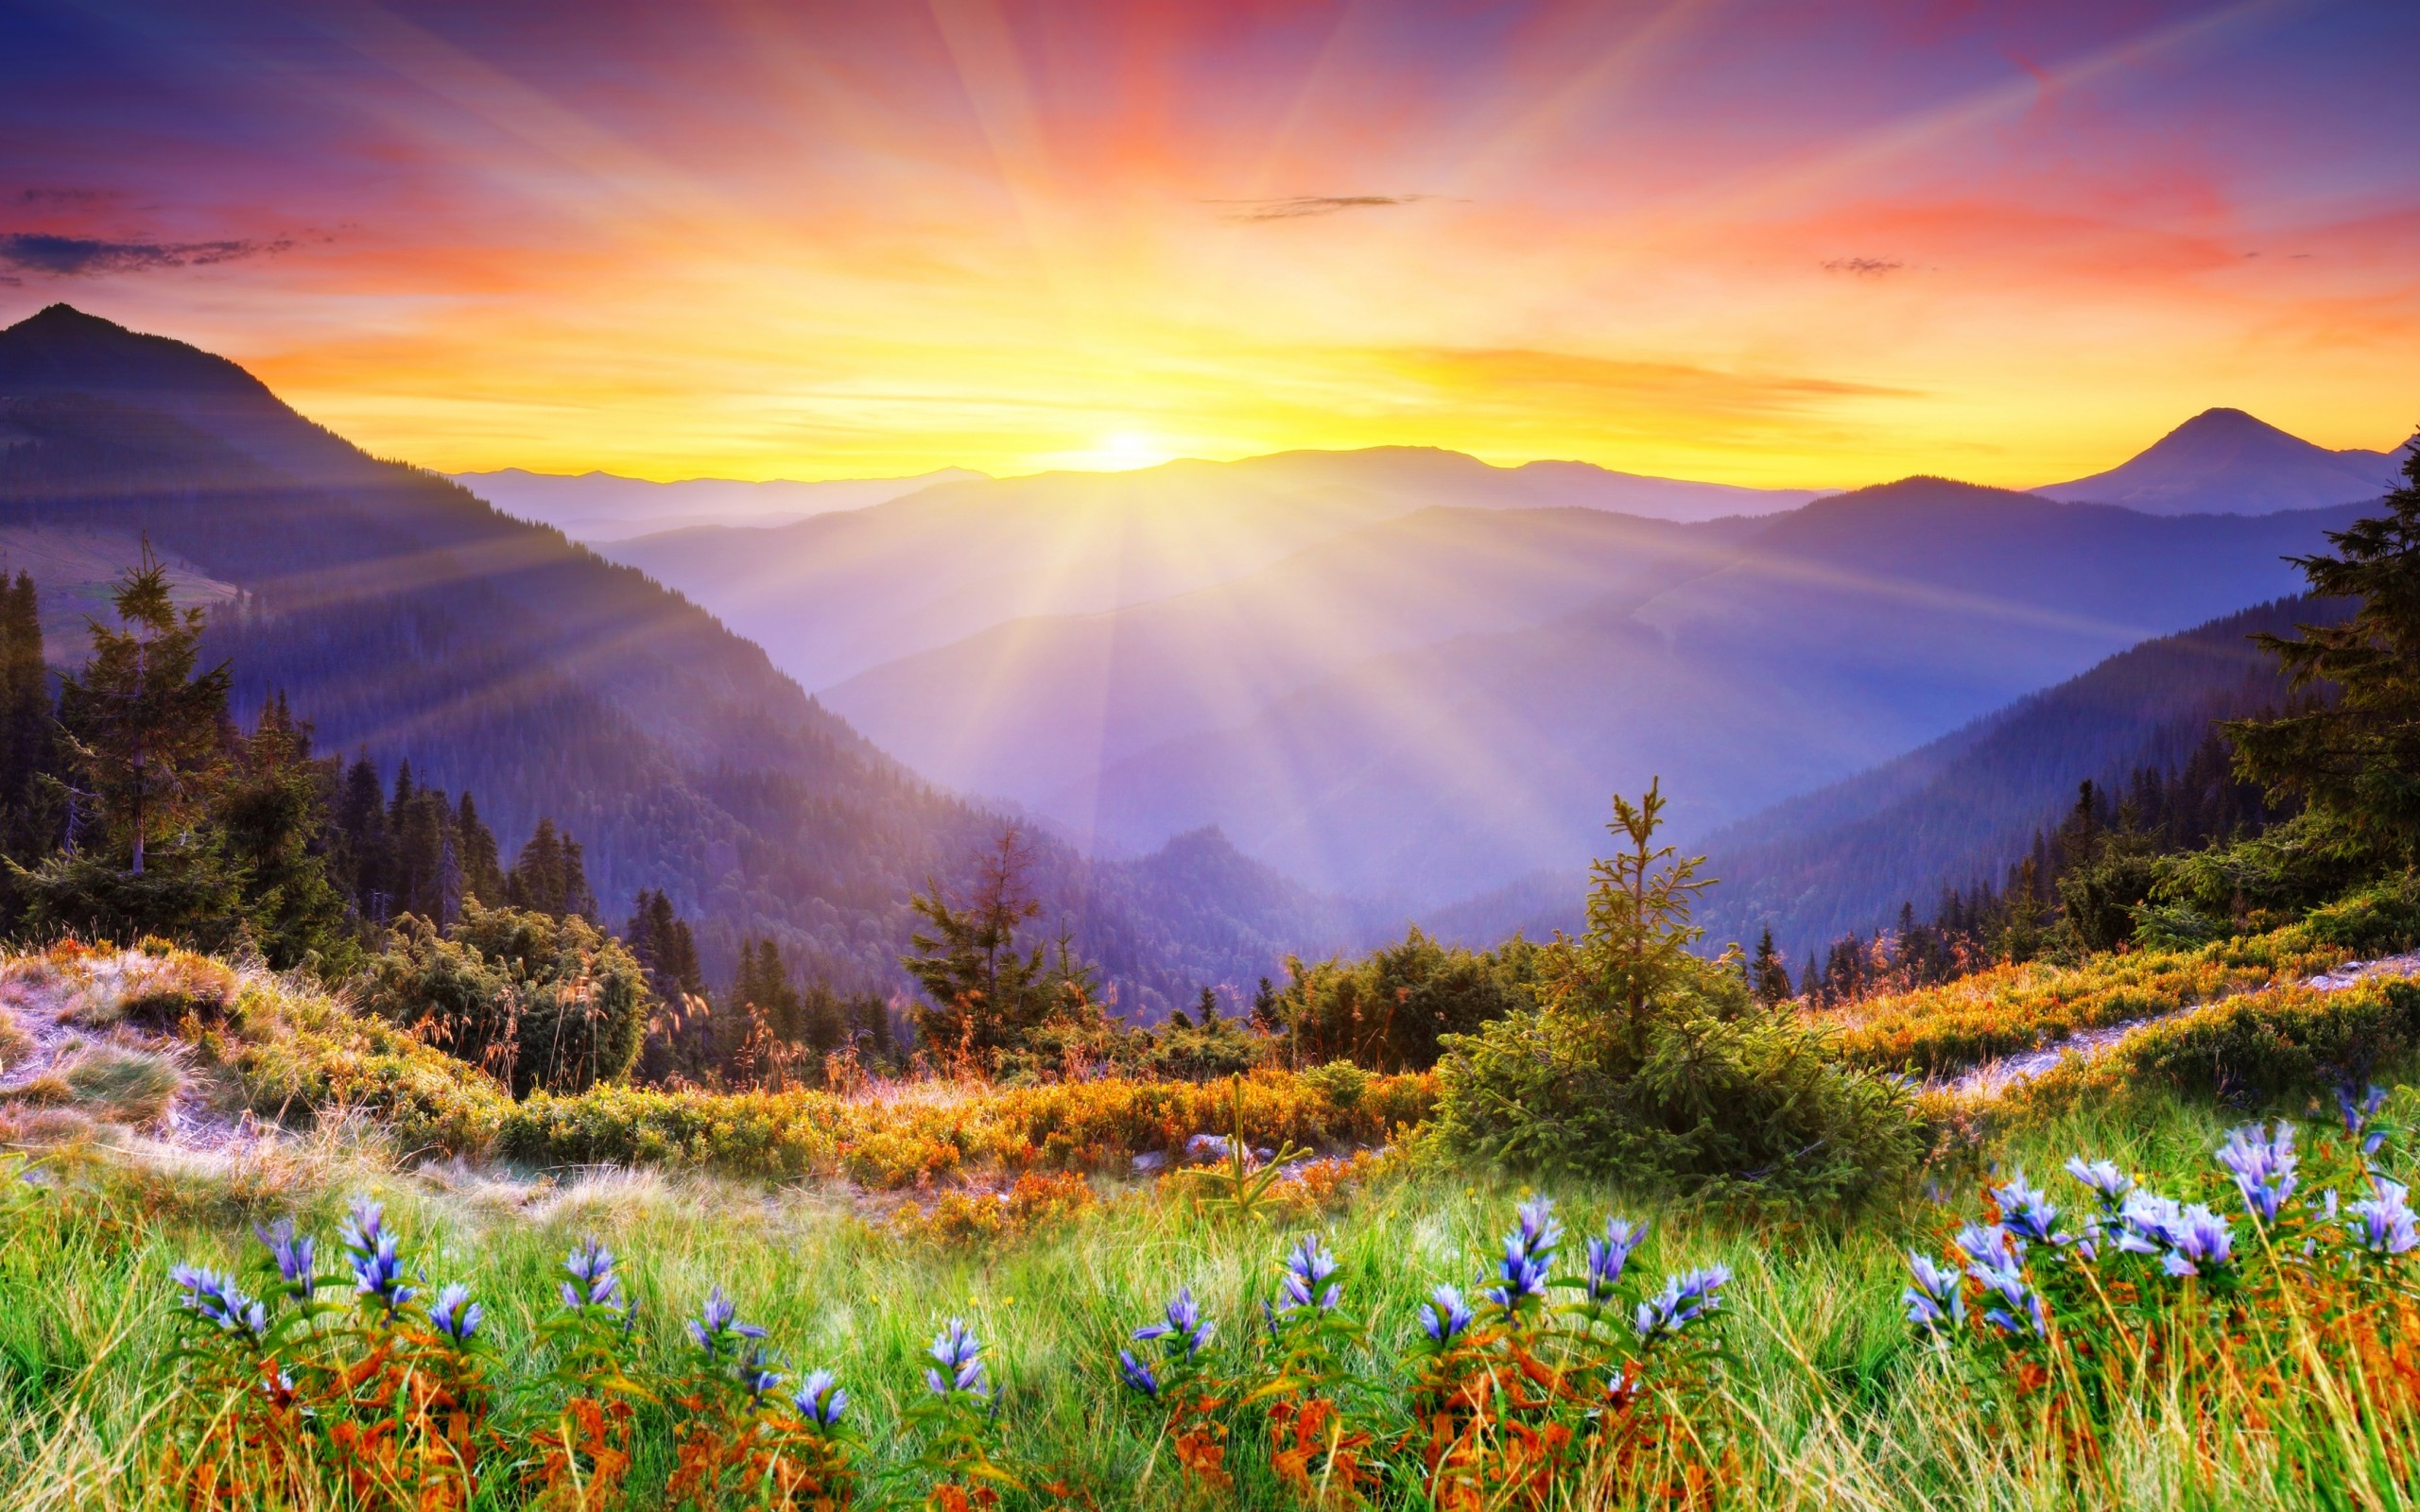 🔥 Download Magical Landscape 4k Ultra HD Wallpaper by @cperez38 | 4K